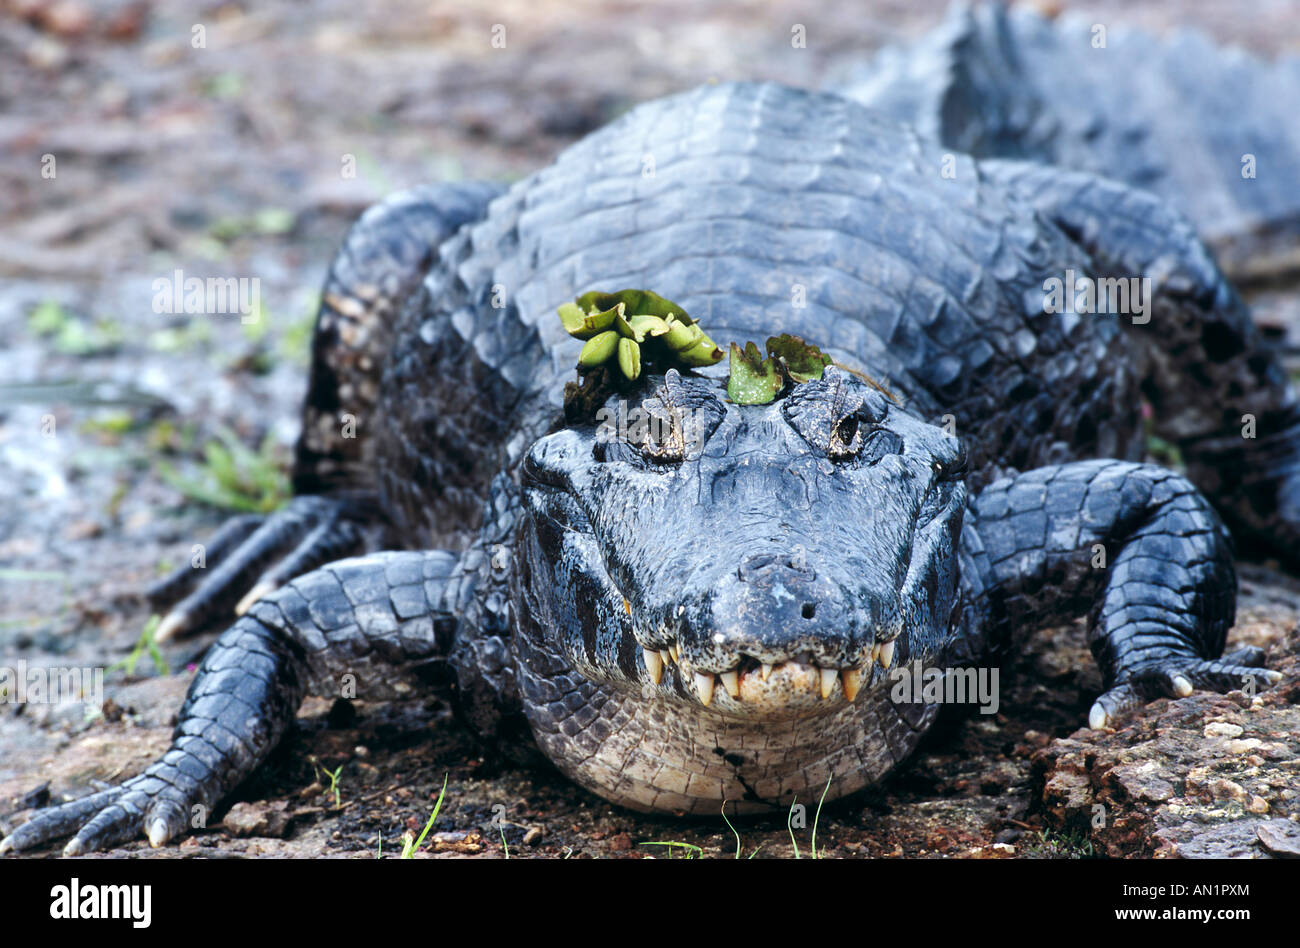 Brillenkaiman Yacare Caiman Paraguayan Caiman Camain crocodilus yacare Pantanal Brazil Brasilien Stock Photo